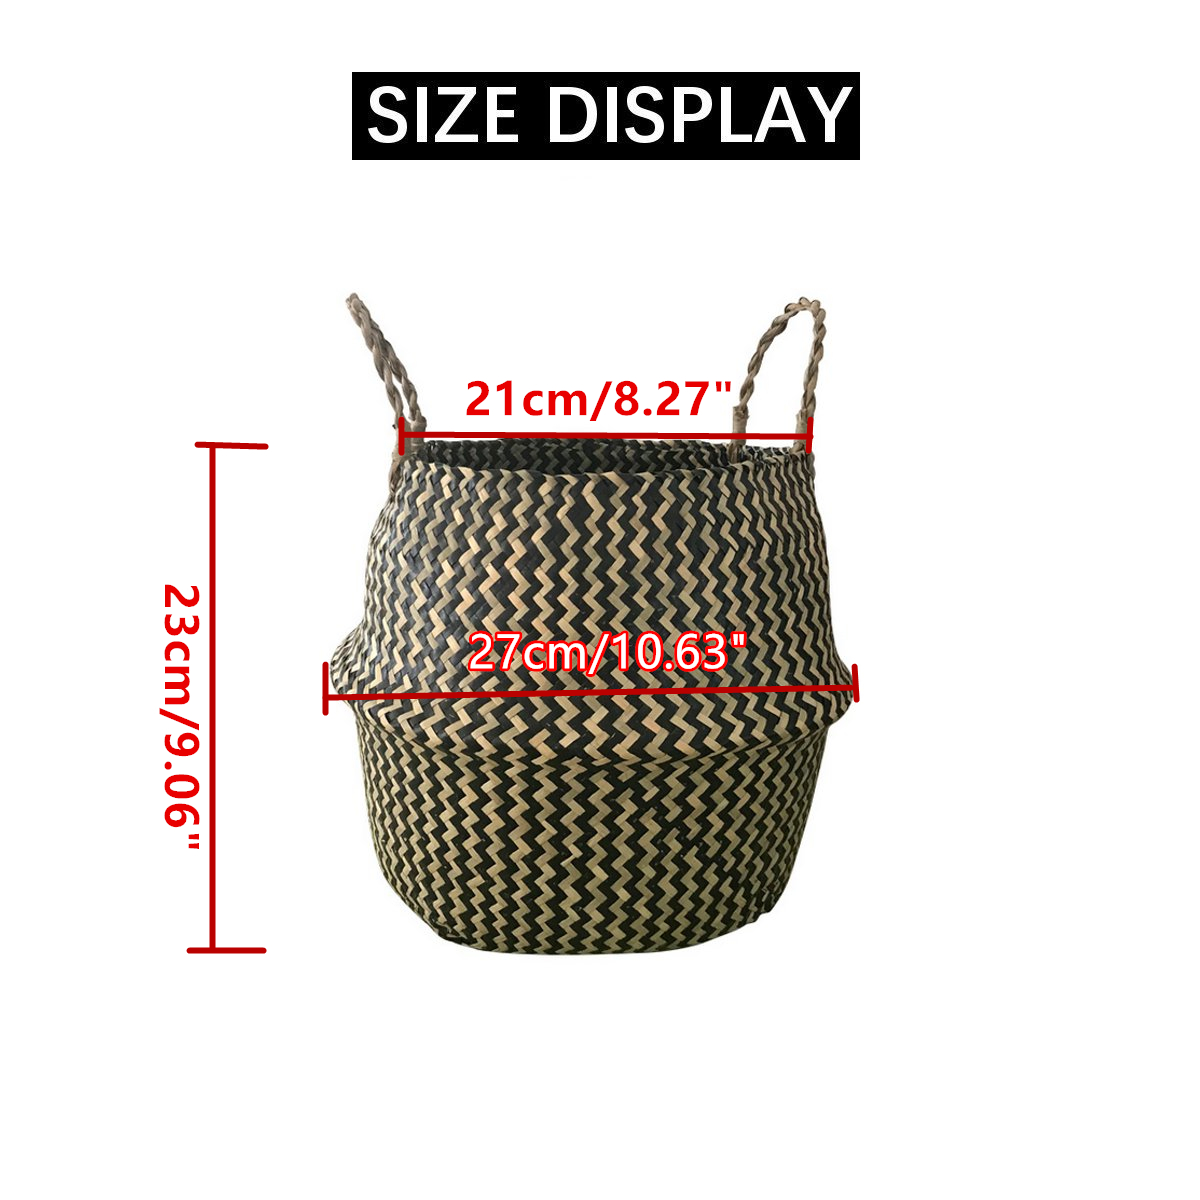 Sea-grass-Belly-Basket-Storage-Plant-Pot-Foldable-Laundry-Nursery-Room-Decor-1900427-6